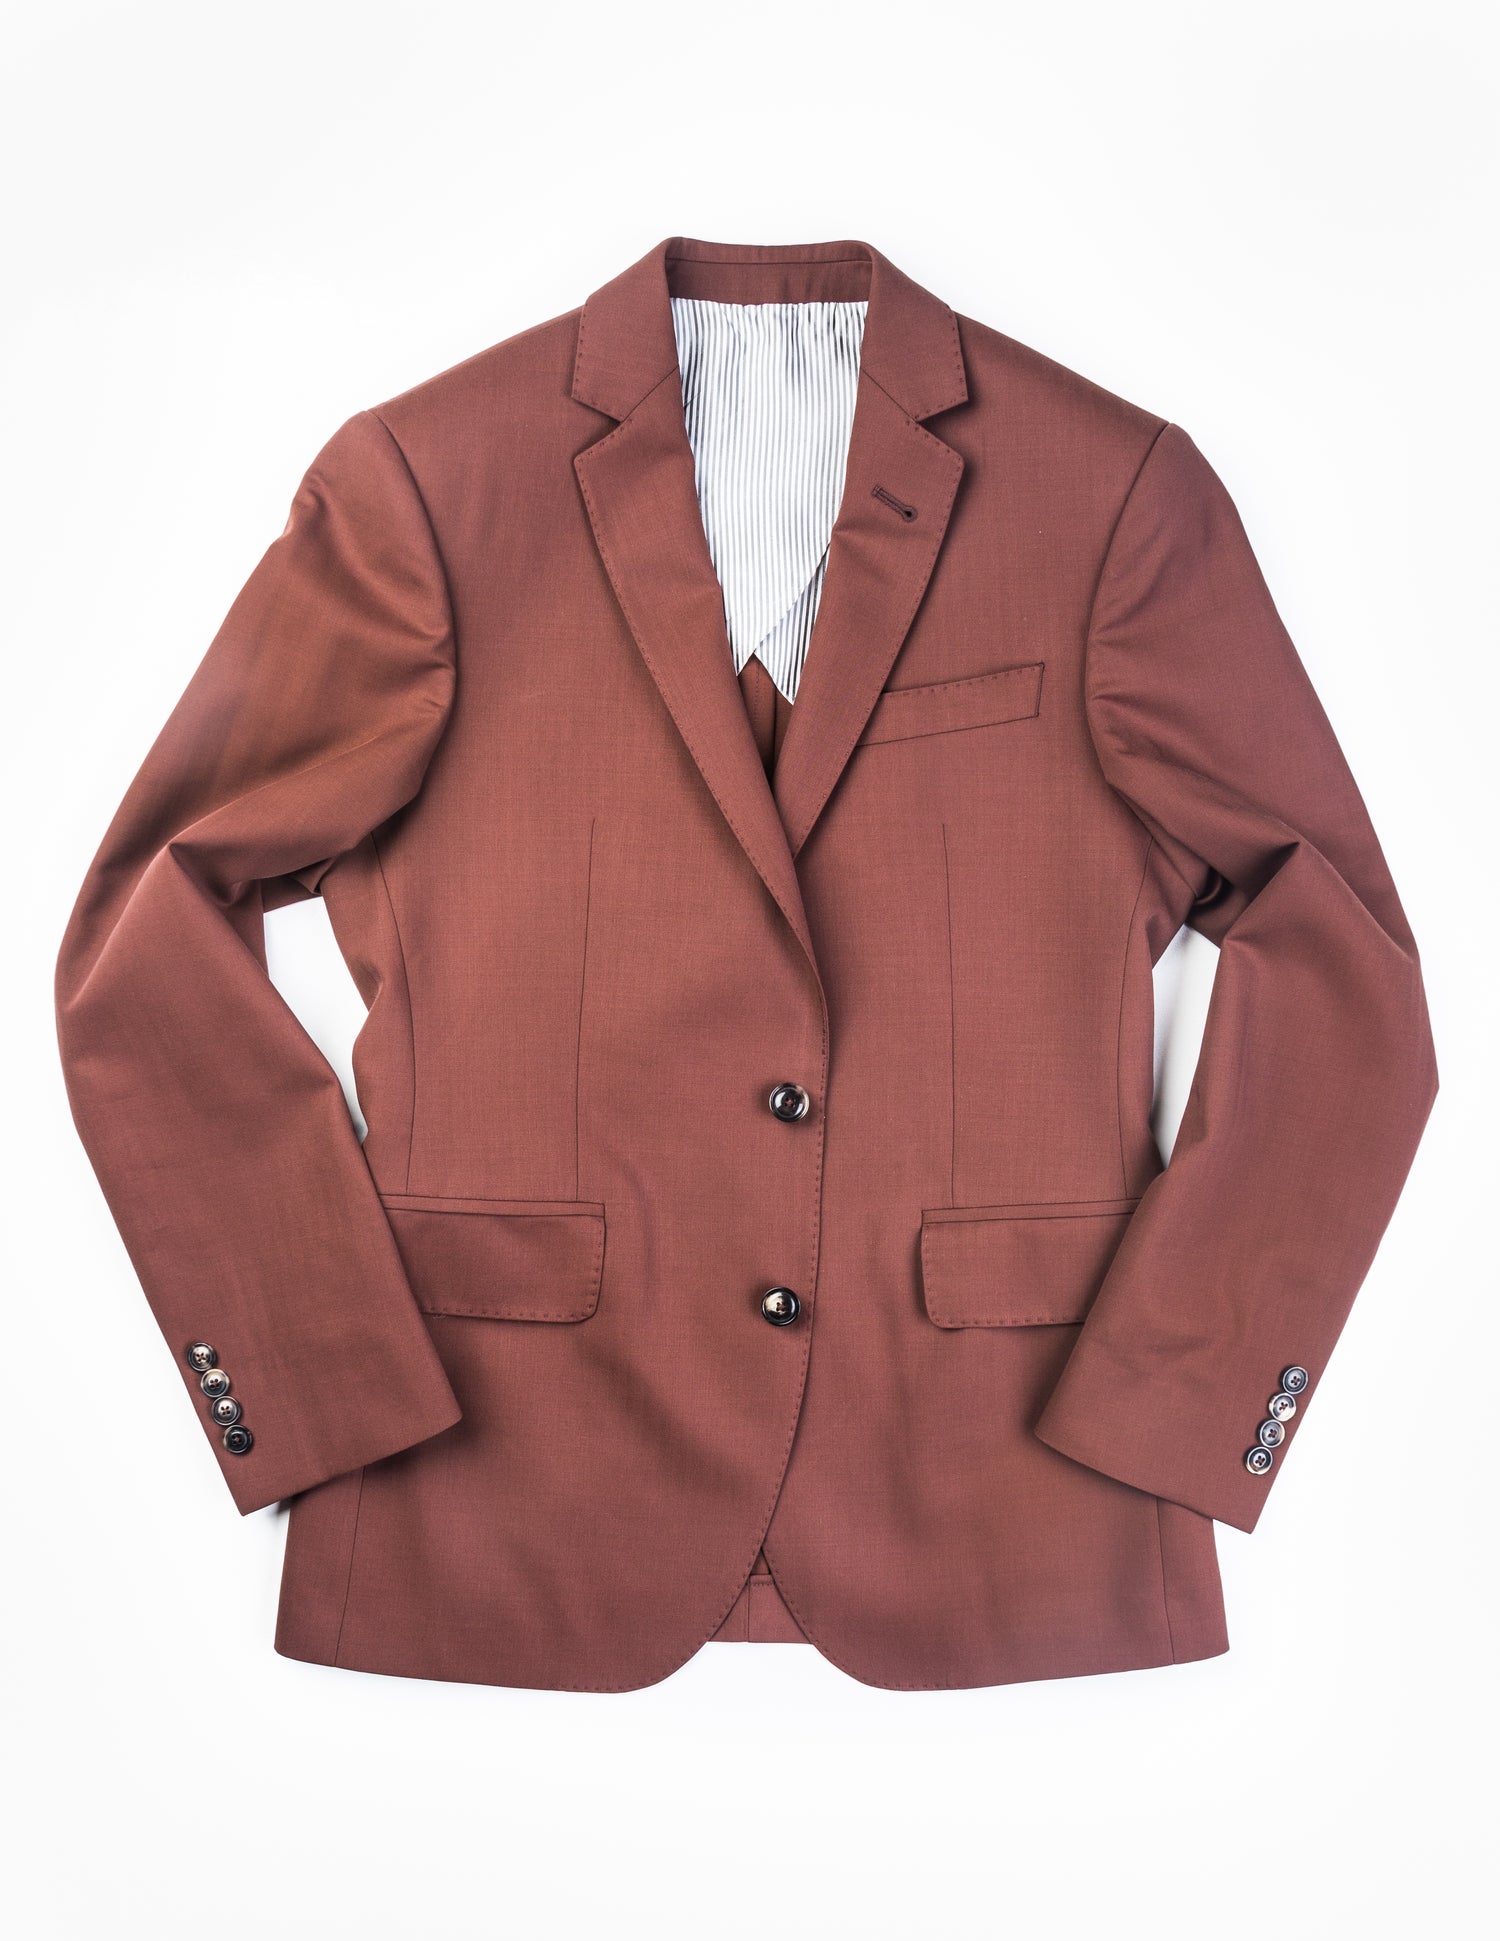 Brooklyn Tailors BKT50 Tailored Jacket in Herringbone Wool/Cotton - Brick full length flat shot